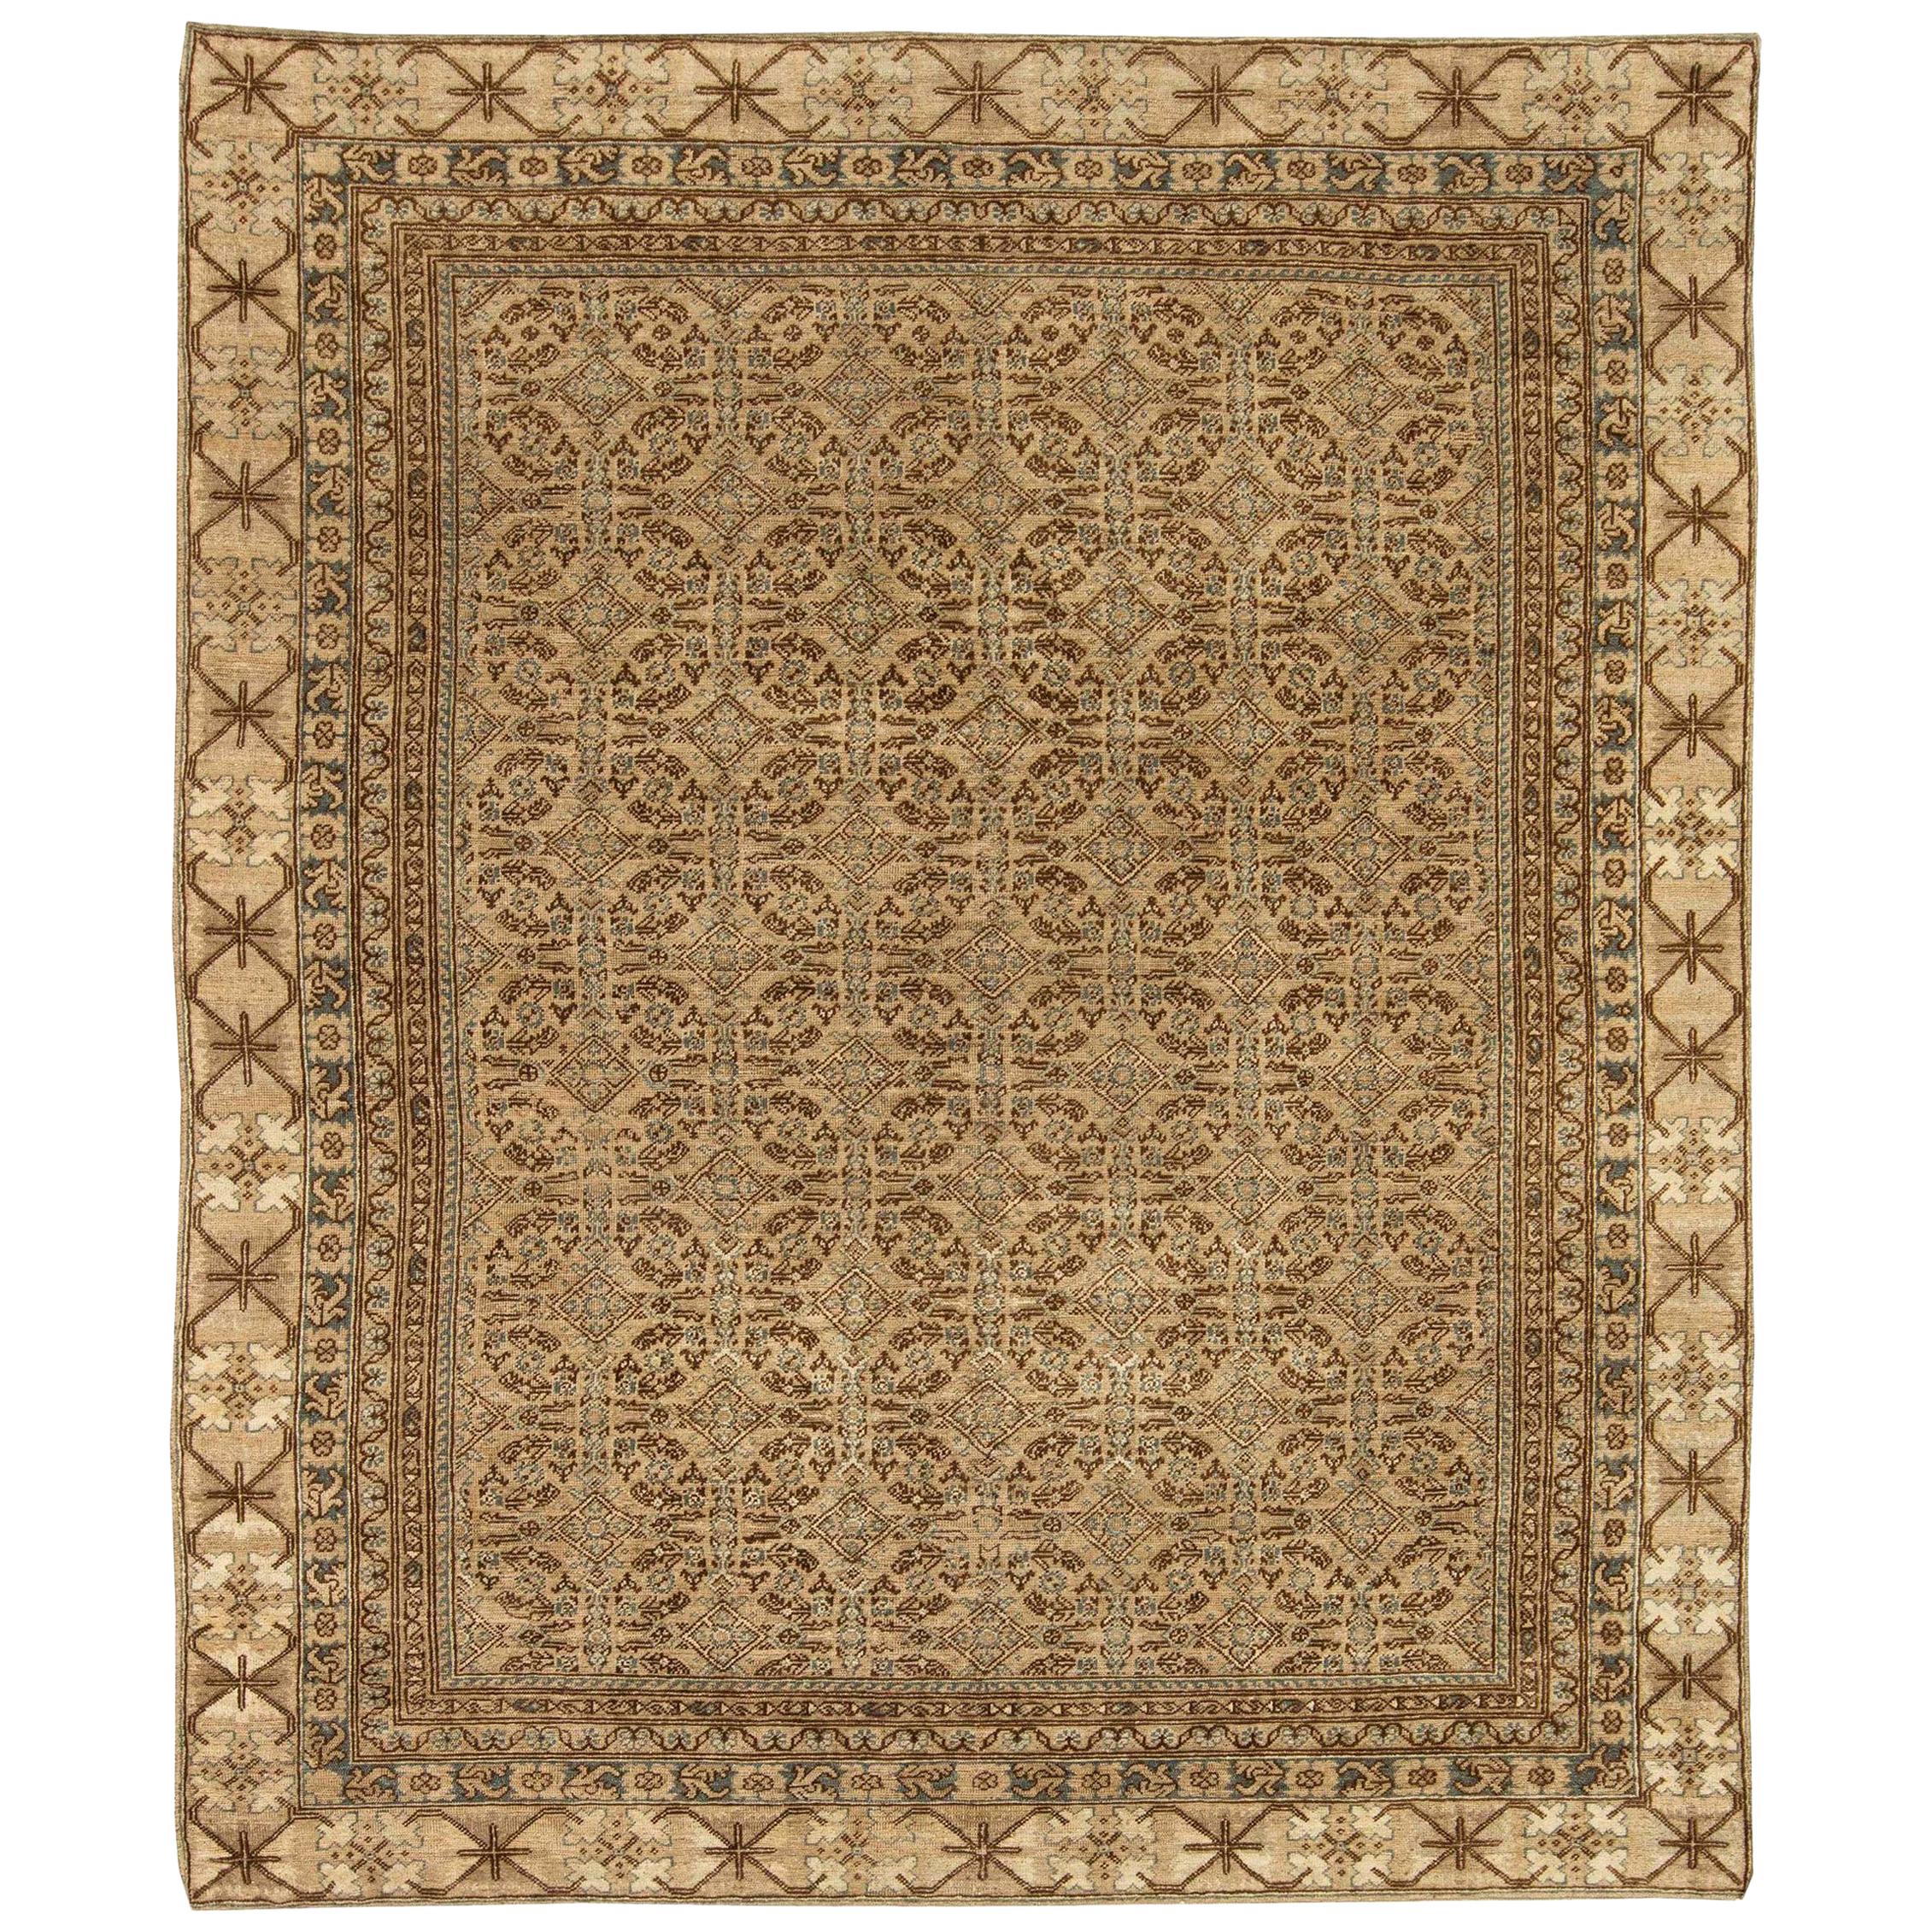 Midcentury Samarkand Brown Beige Handwoven Wool Rug